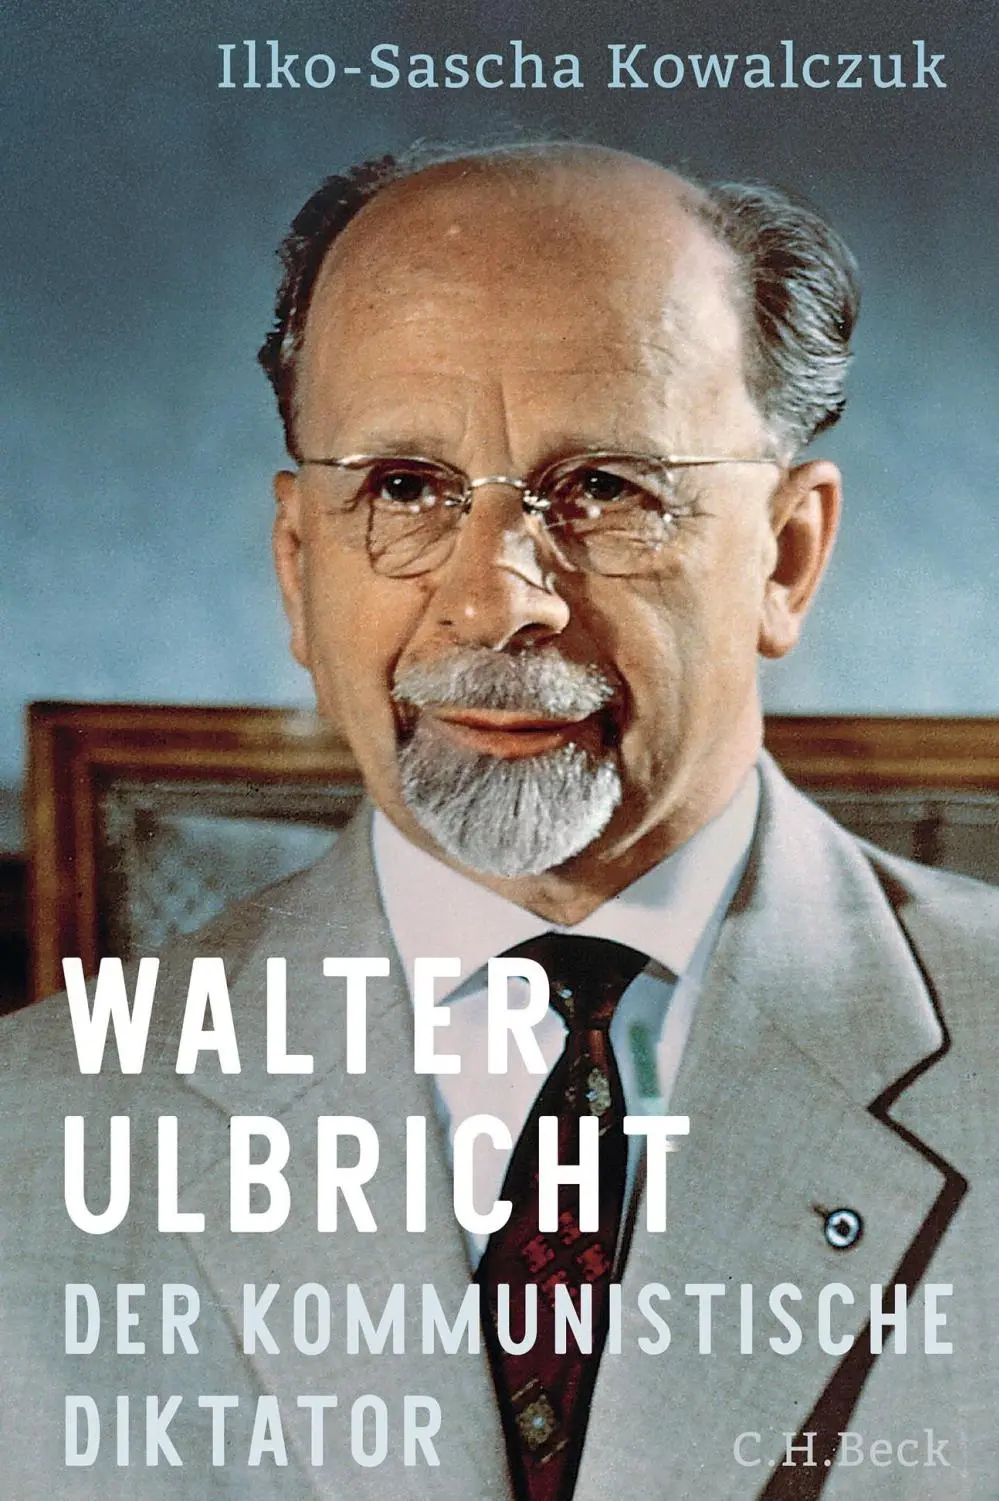 Buchcover: Ilko-Sascha Kowalczuk: Walter Ulbricht. 